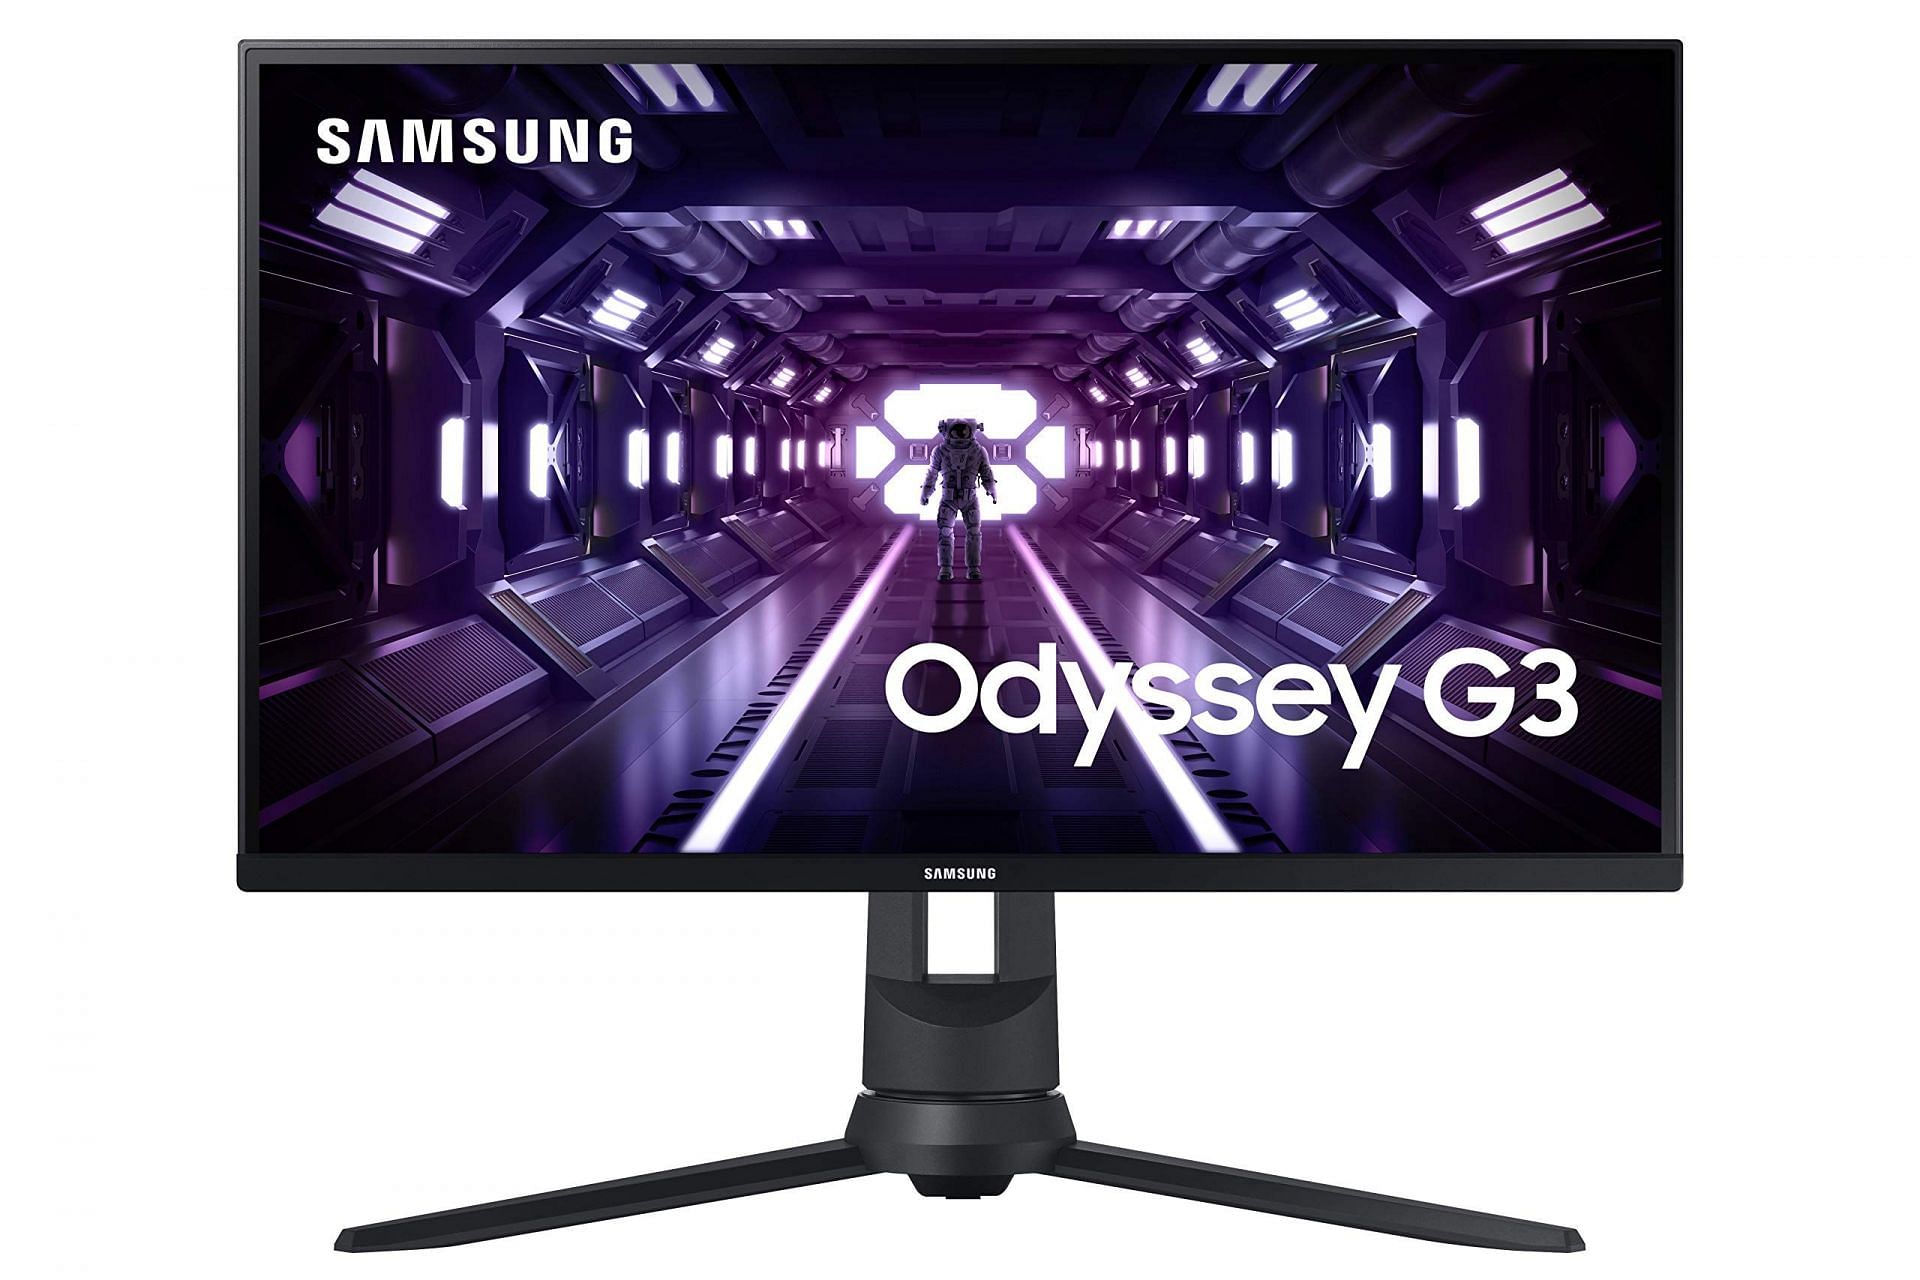 The Samsung Odyssey G3 (Image via Amazon)